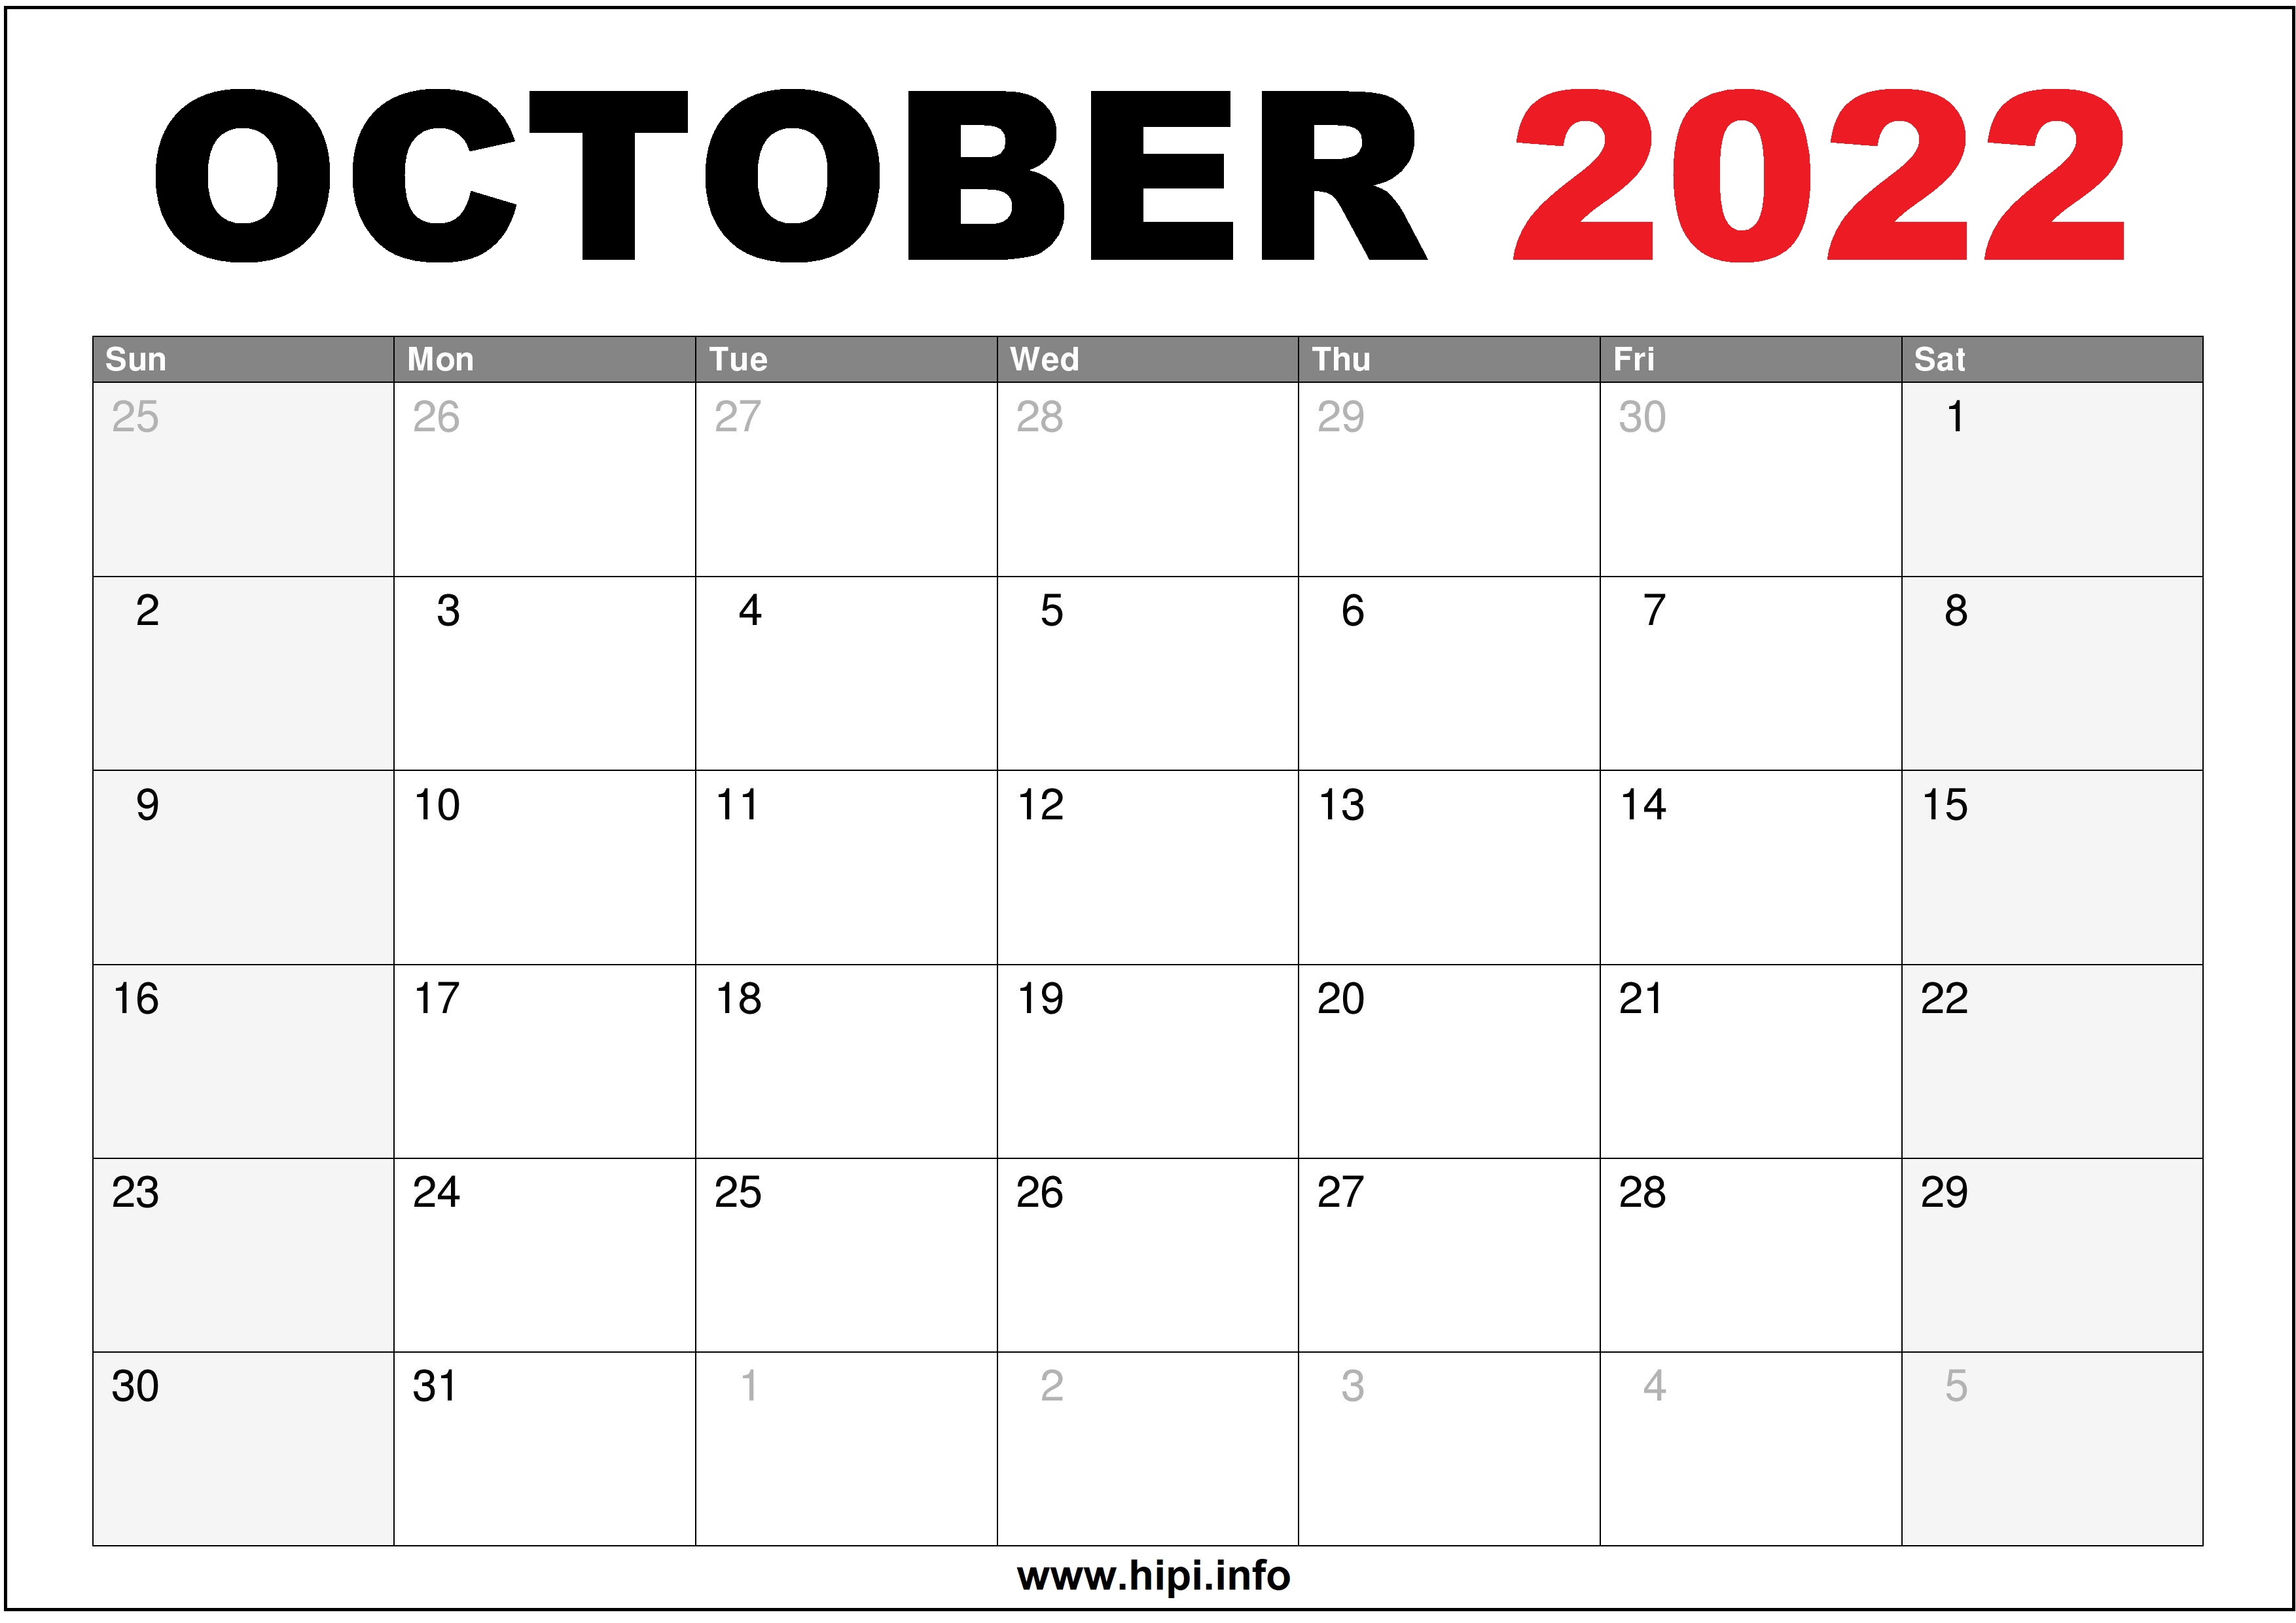 October Calendar 2022 Printable October 2022 Calendar Printable Us - Hipi.info | Calendars Printable Free